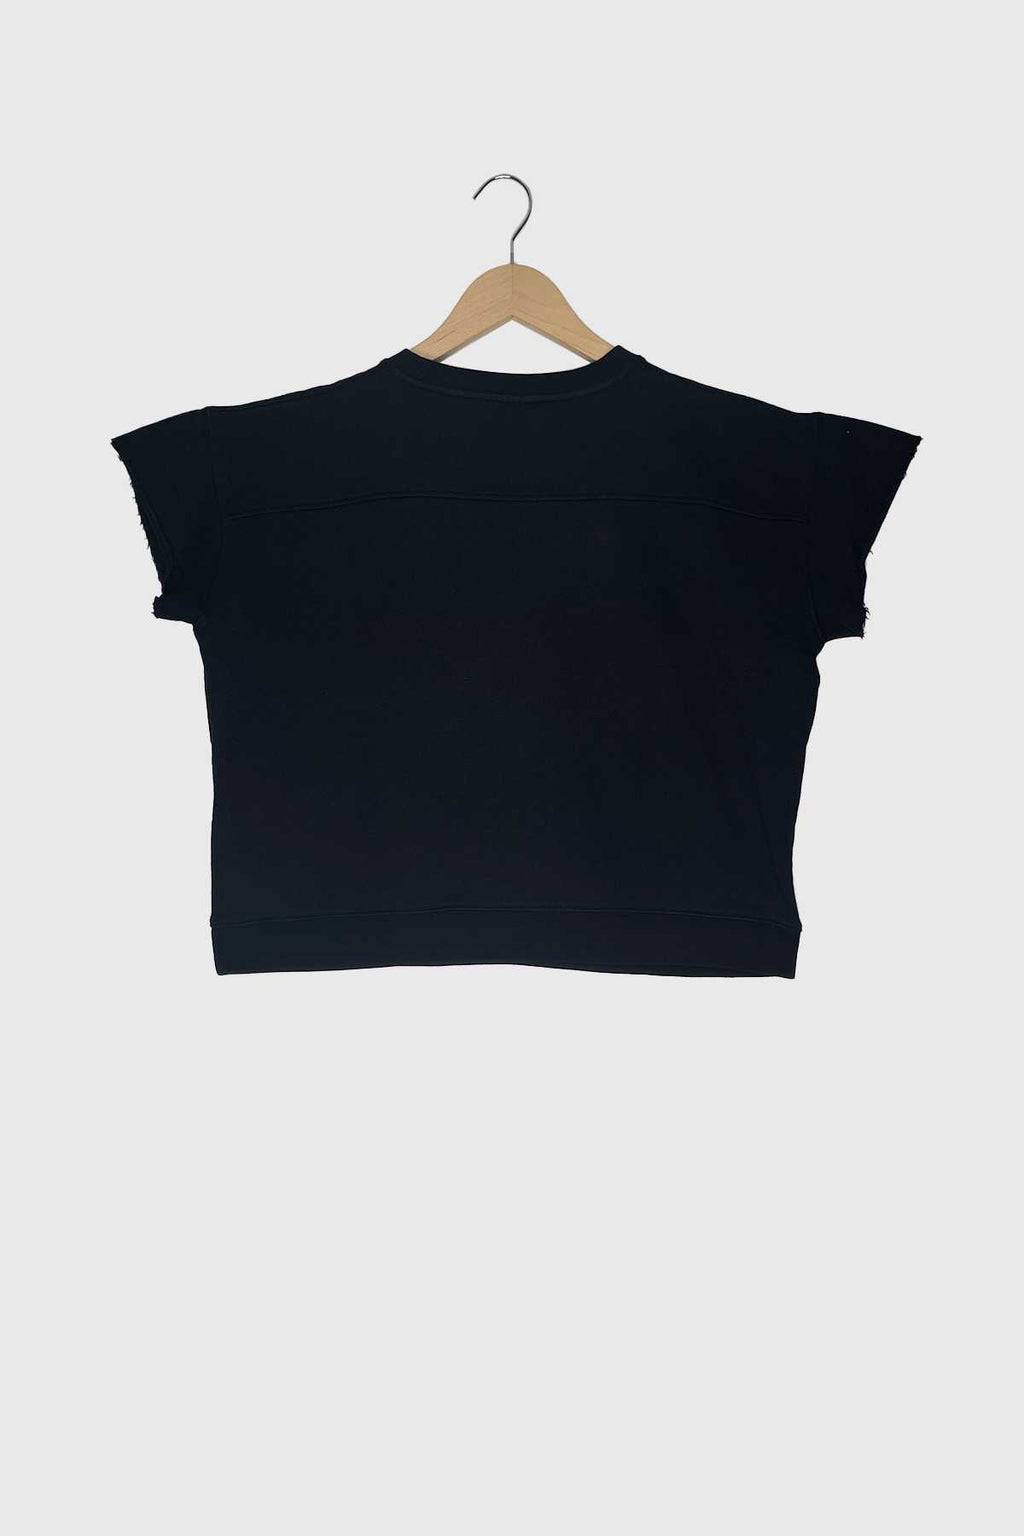 #078 - "VOULEZ-VOUS" short-sleeved sweatshirt black // Size S/M YUJ - House of Mindfulness